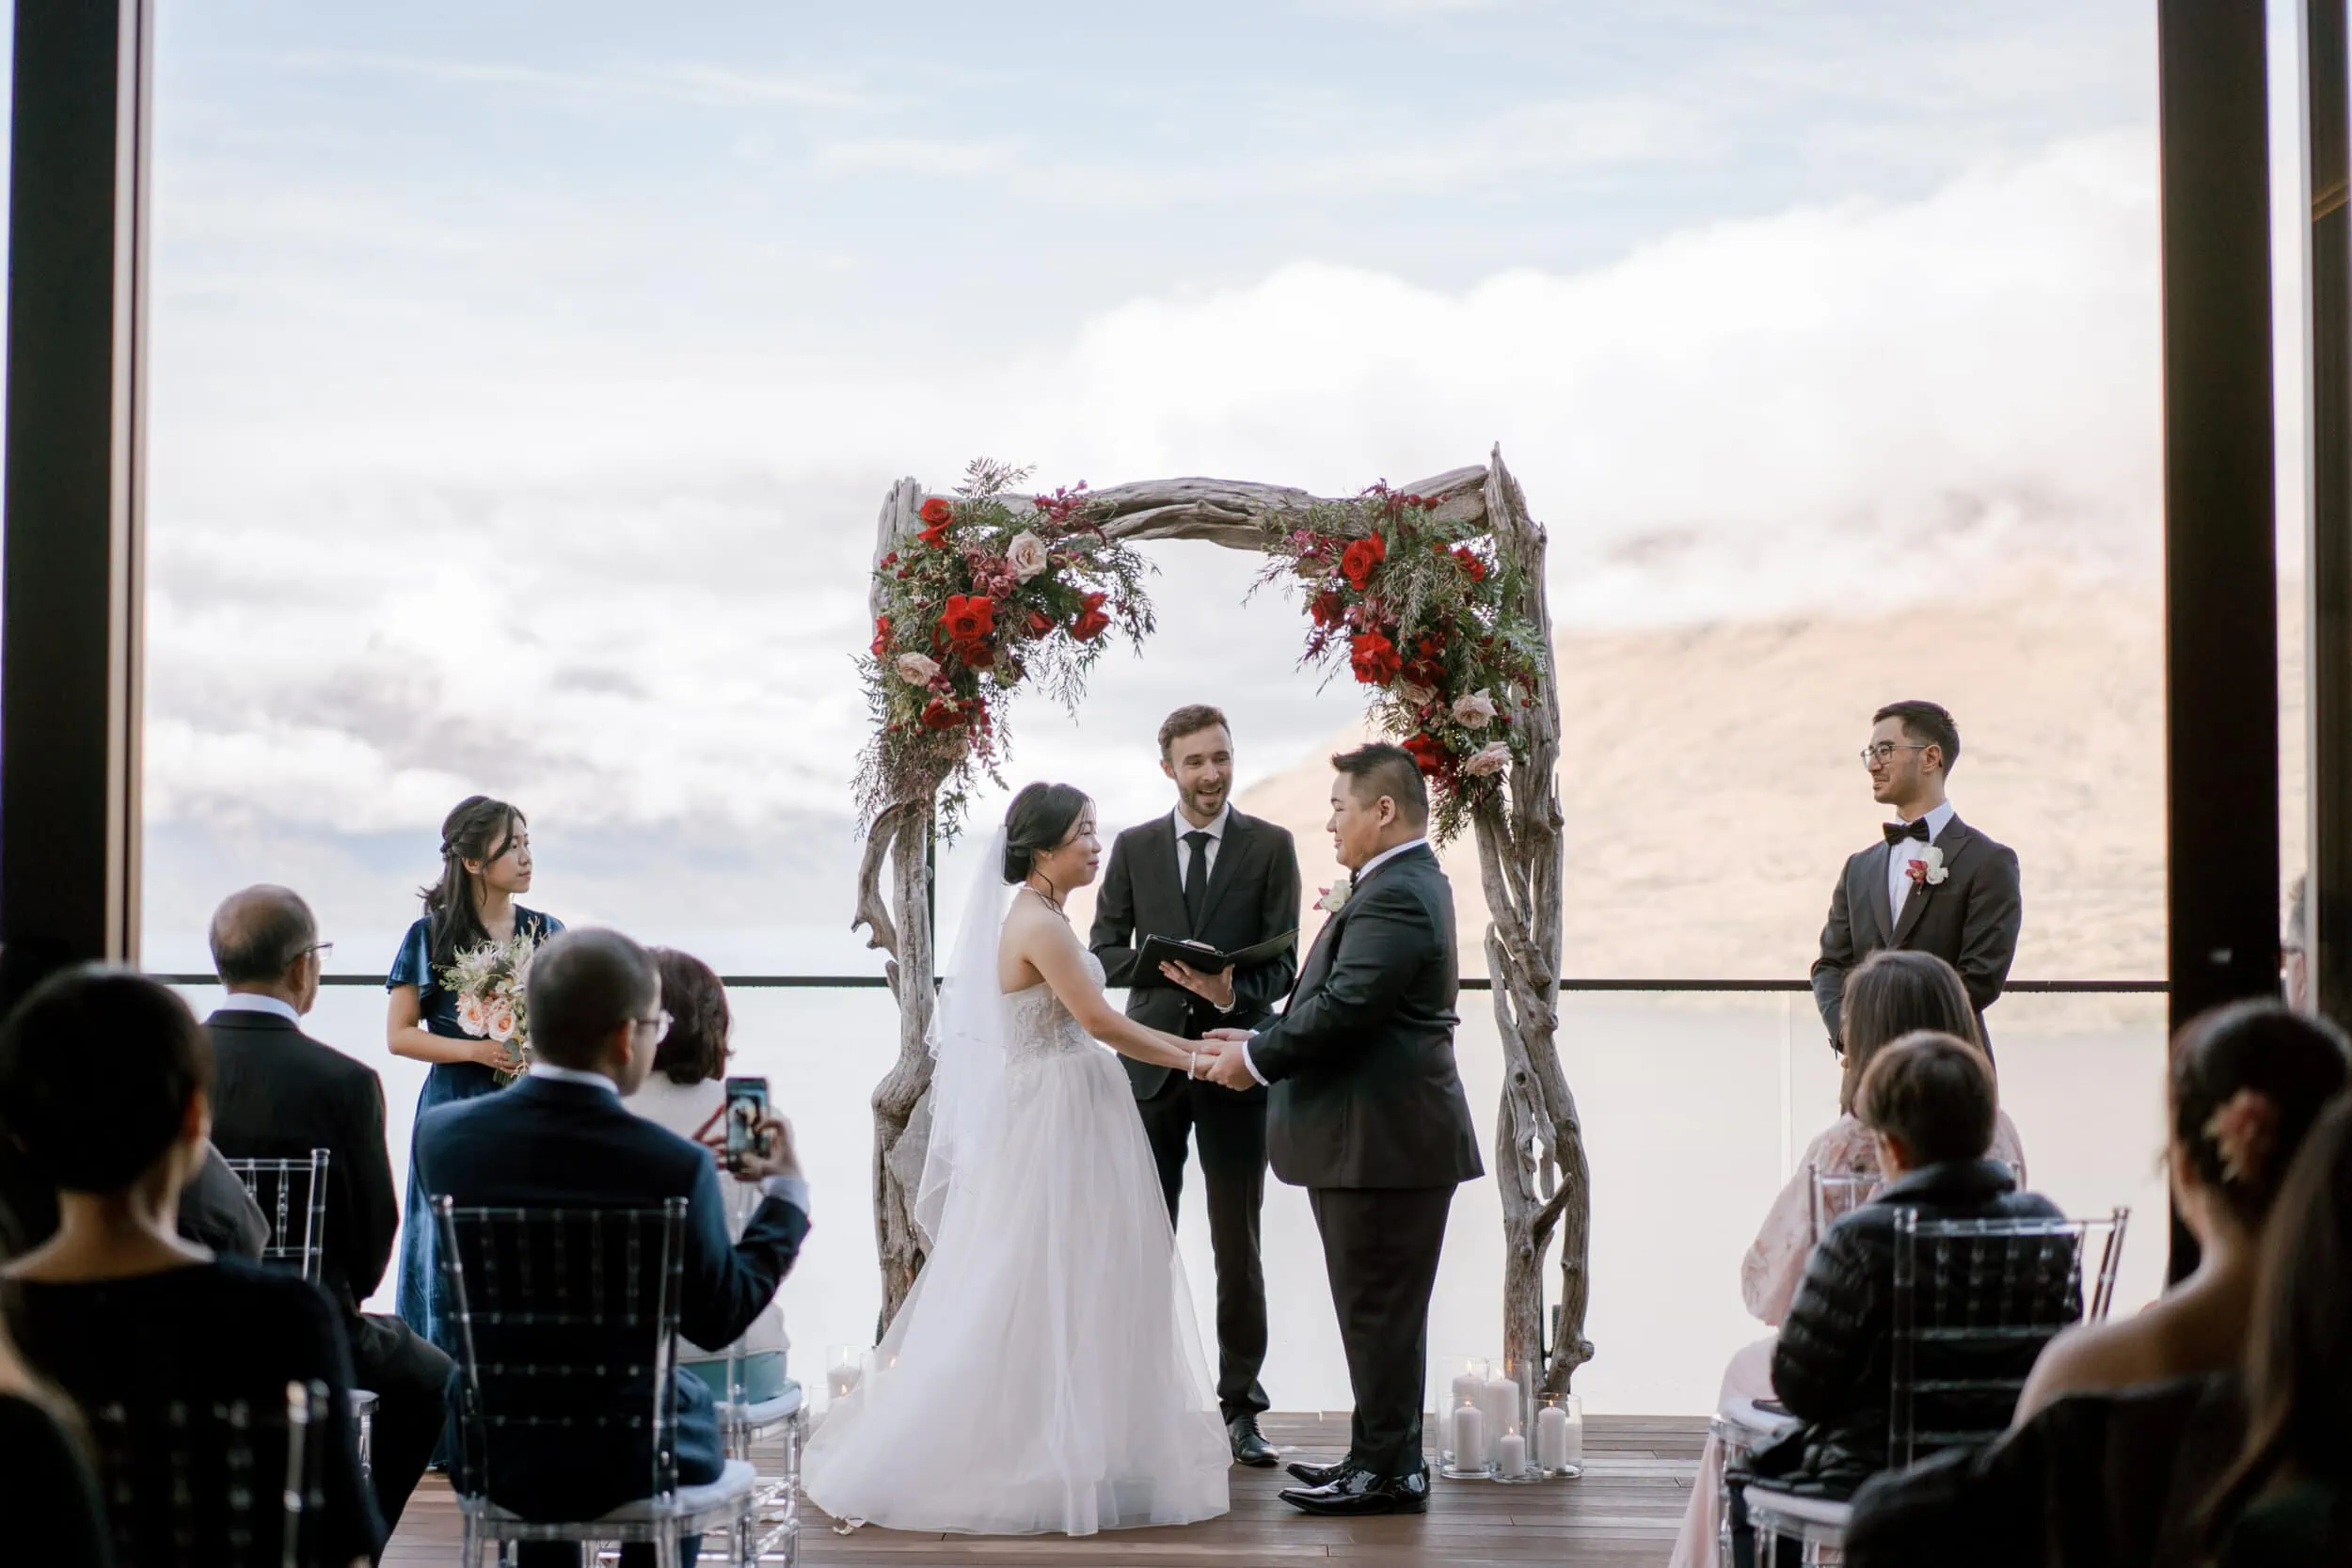 Queenstown New Zealand Elopement Wedding Photographer - Lam and Wendy's Kamana Lakehouse Wedding in Queenstown, New Zealand includes a vow exchange and heli shoot.